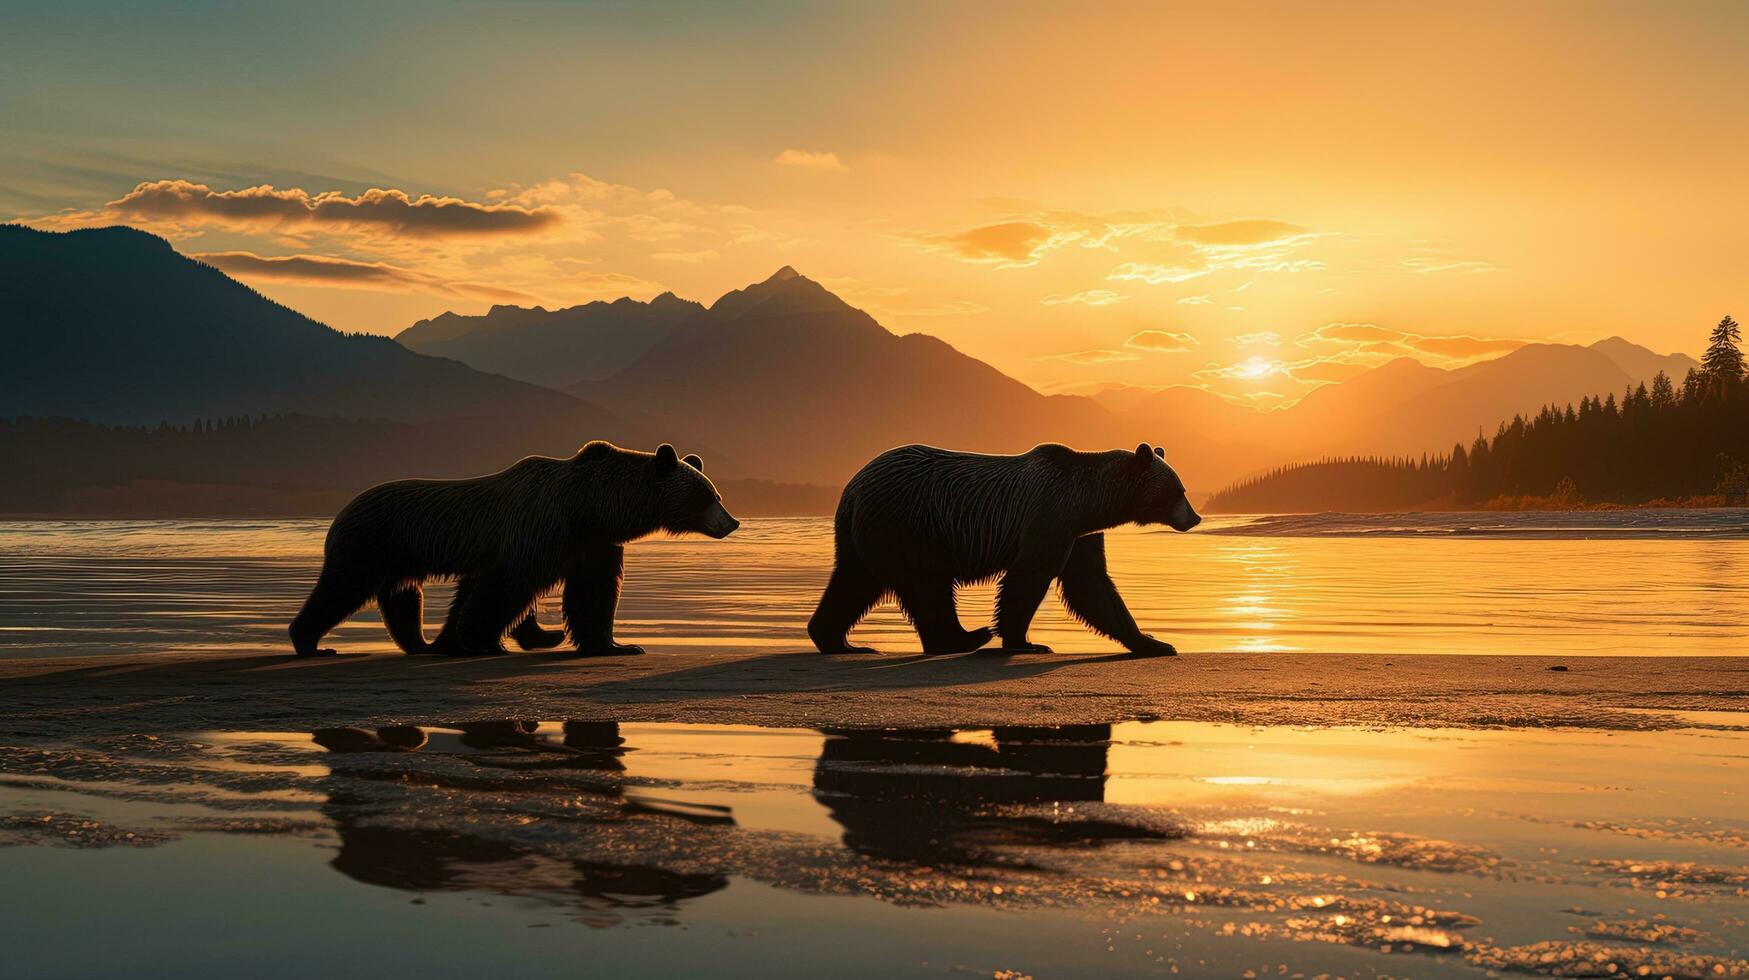 Grizzly bear family seeks salmon breakfast by the beach in Katmai National Park Alaska. silhouette concept photo